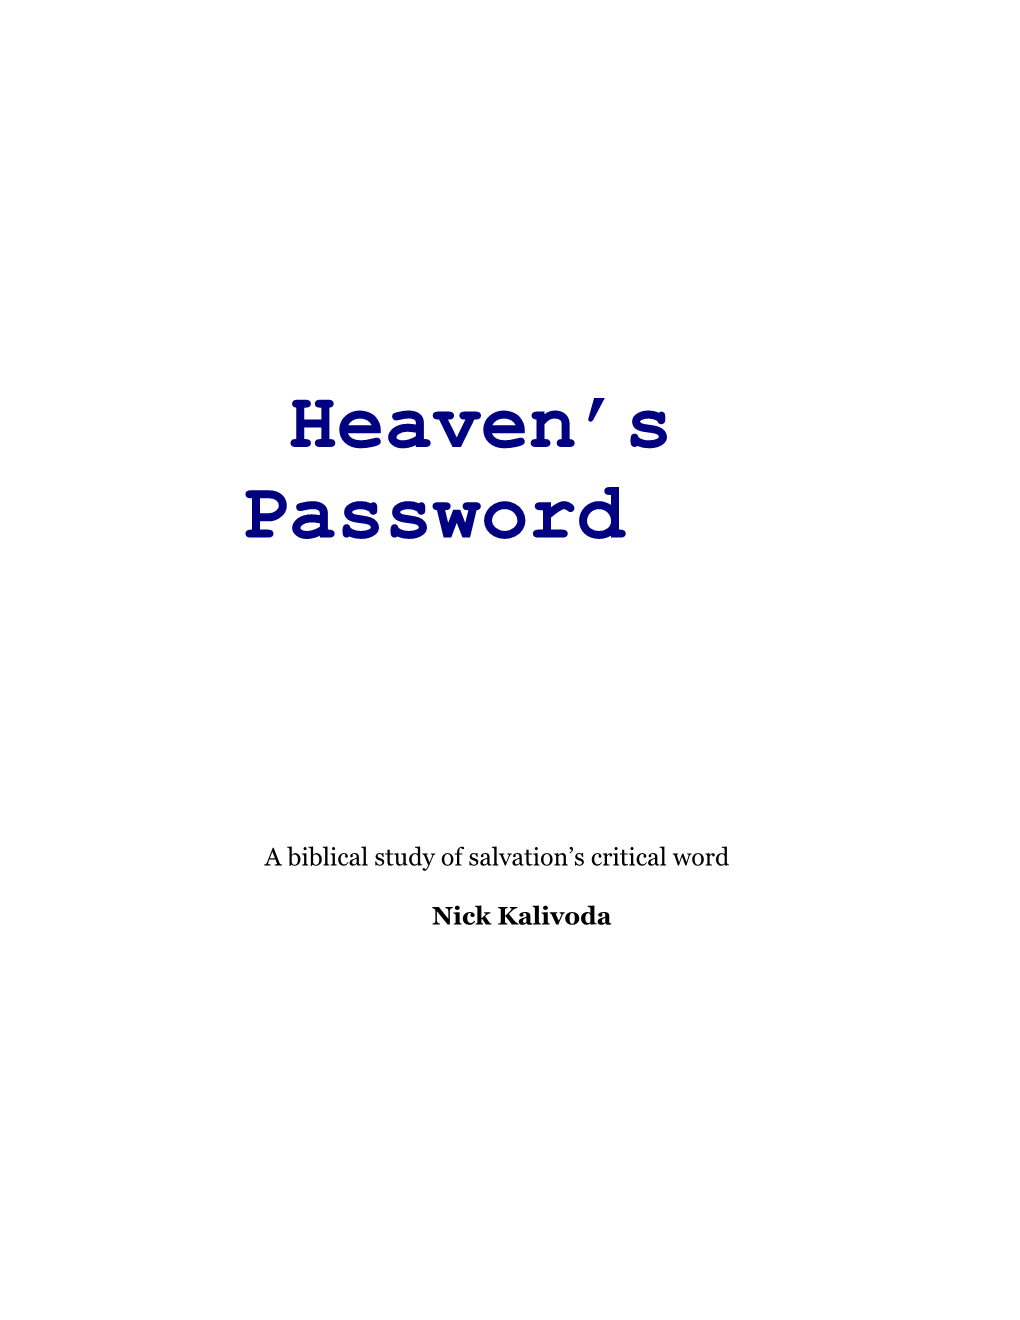 Heaven's Password Copyright 2000 Revised Printing 10,000